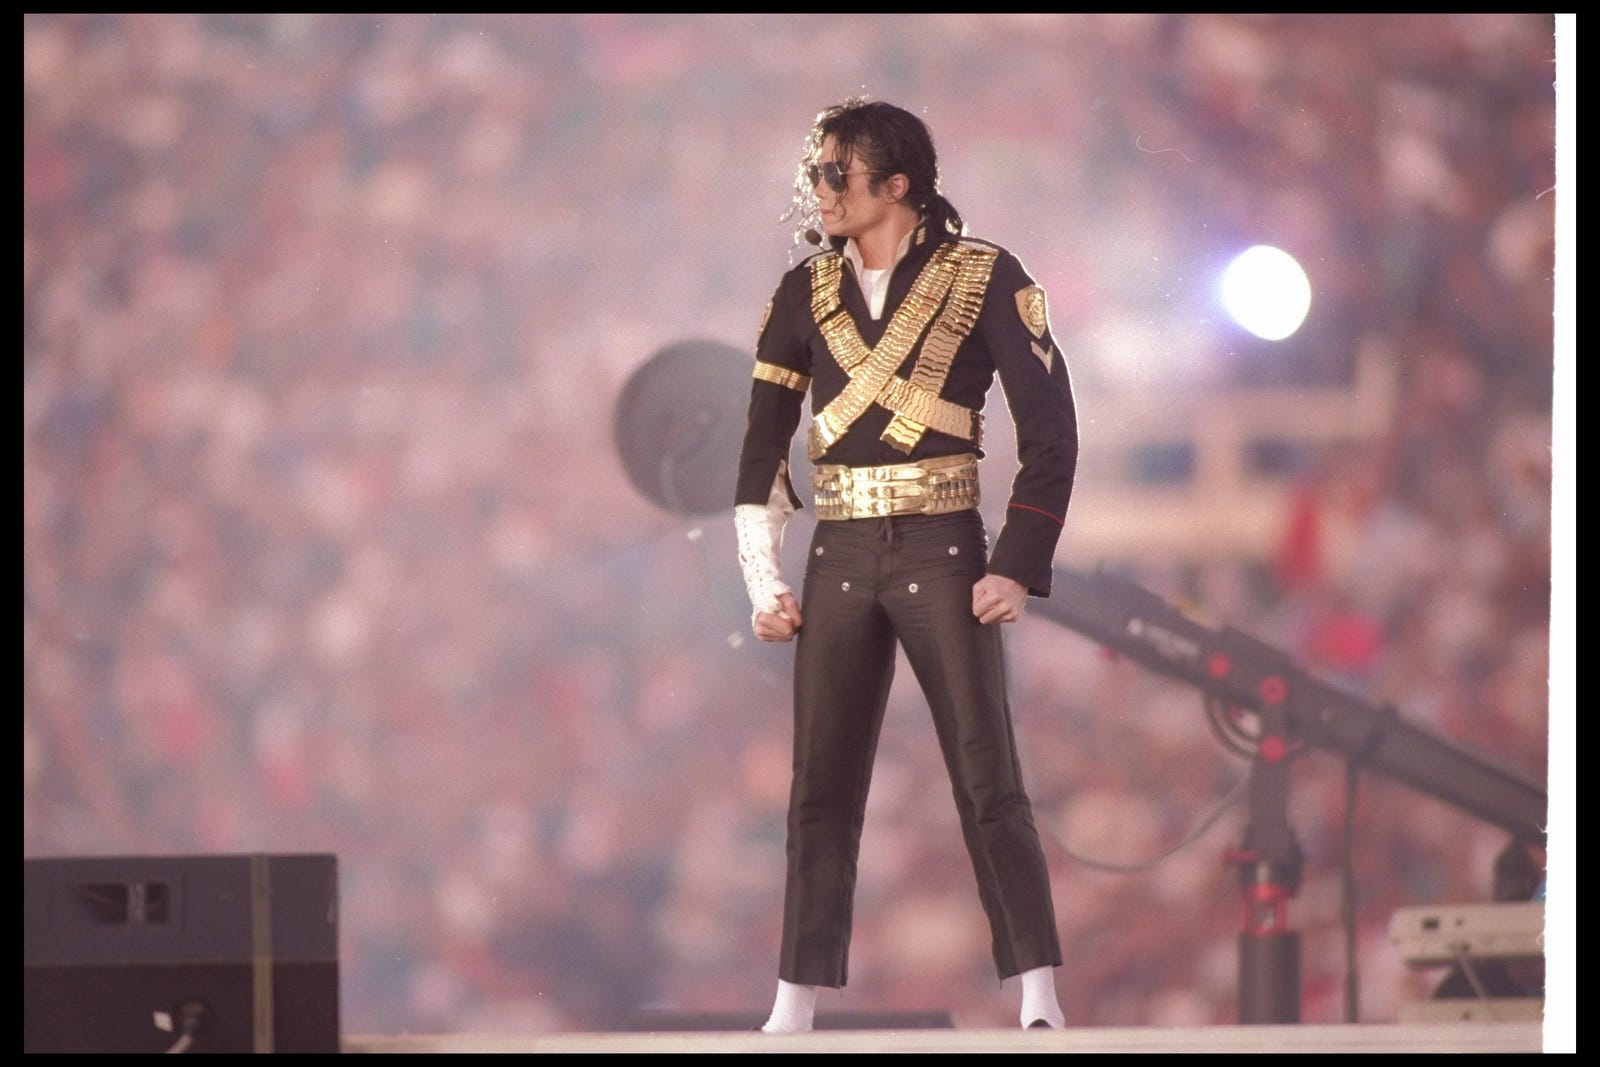 Ephraim Sykes Talks Becoming Michael Jackson in 2020 Musical